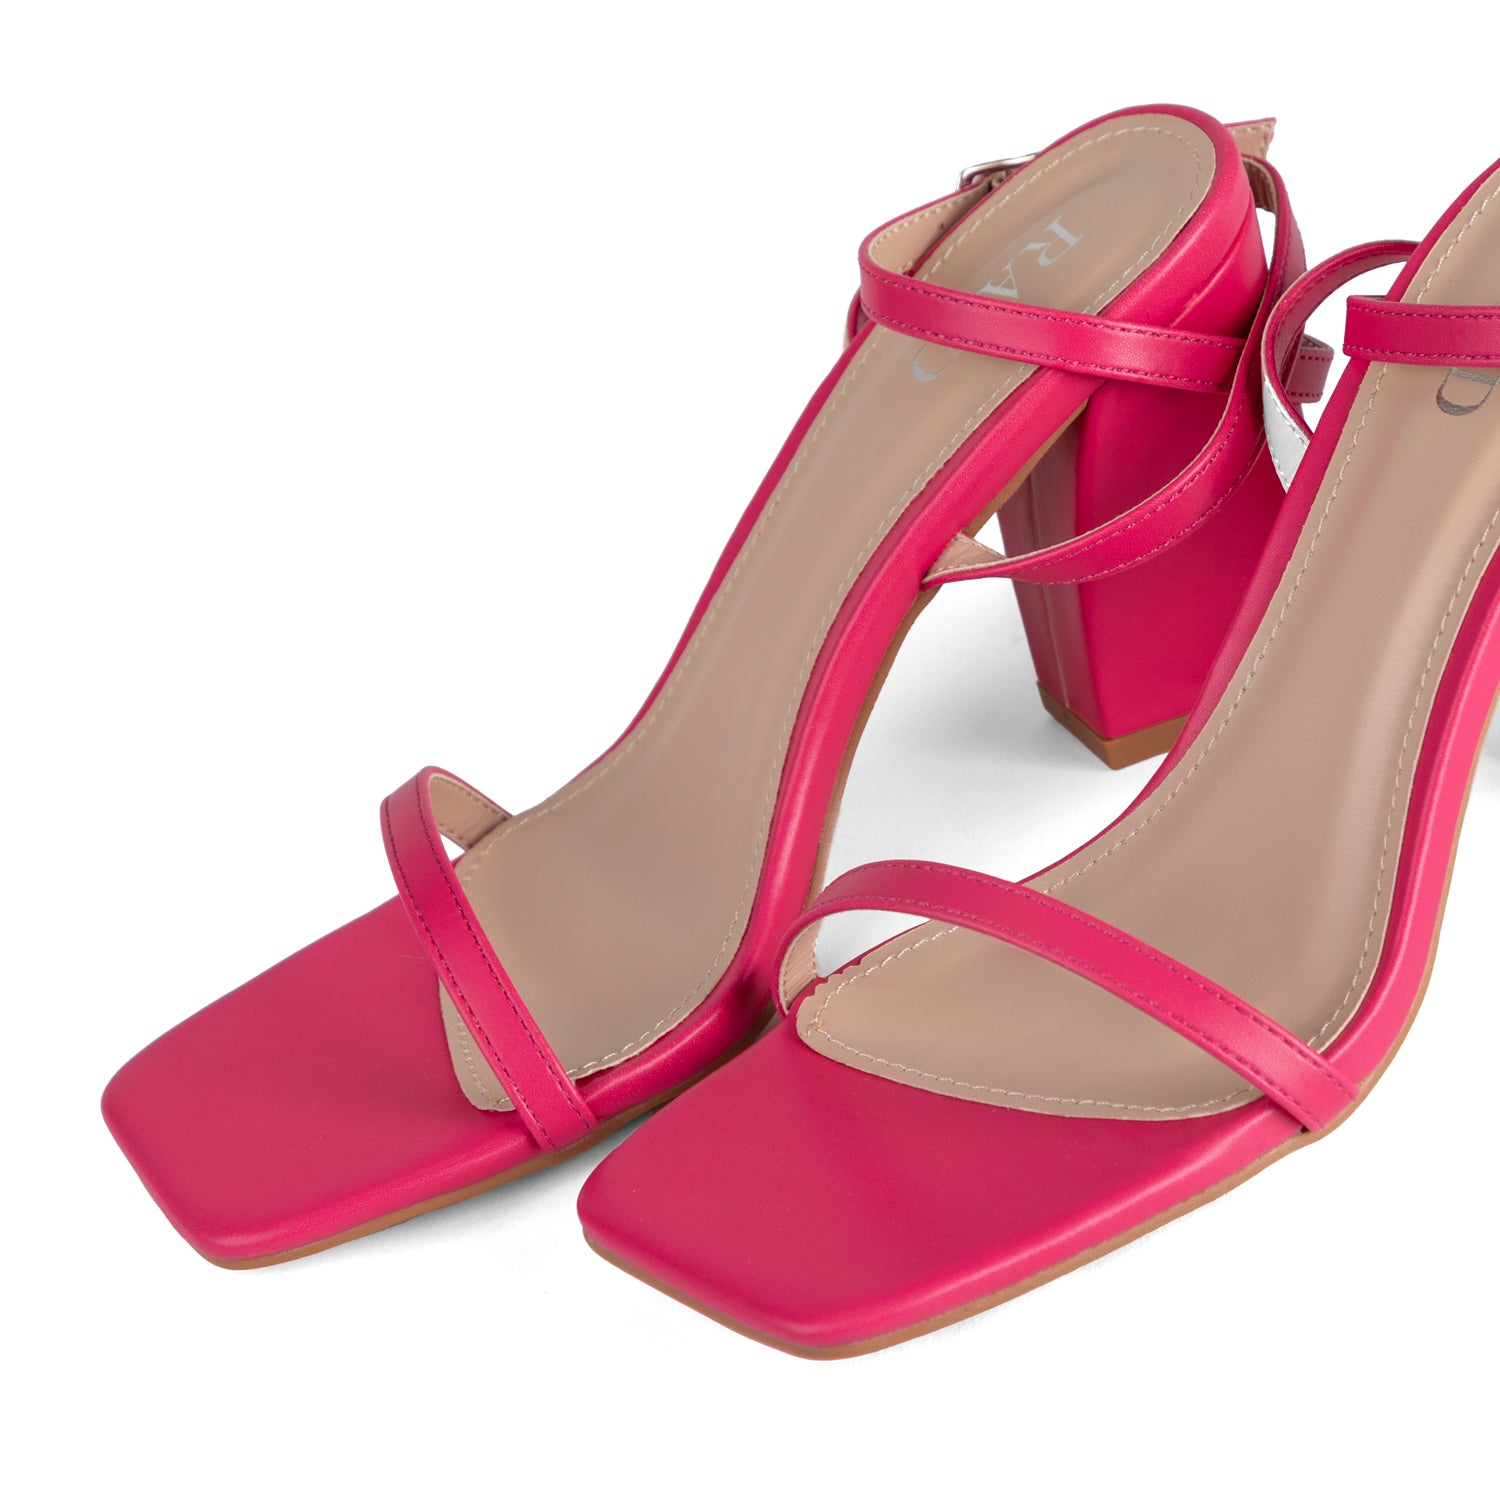 RAID Blaire Block Heels in Pink